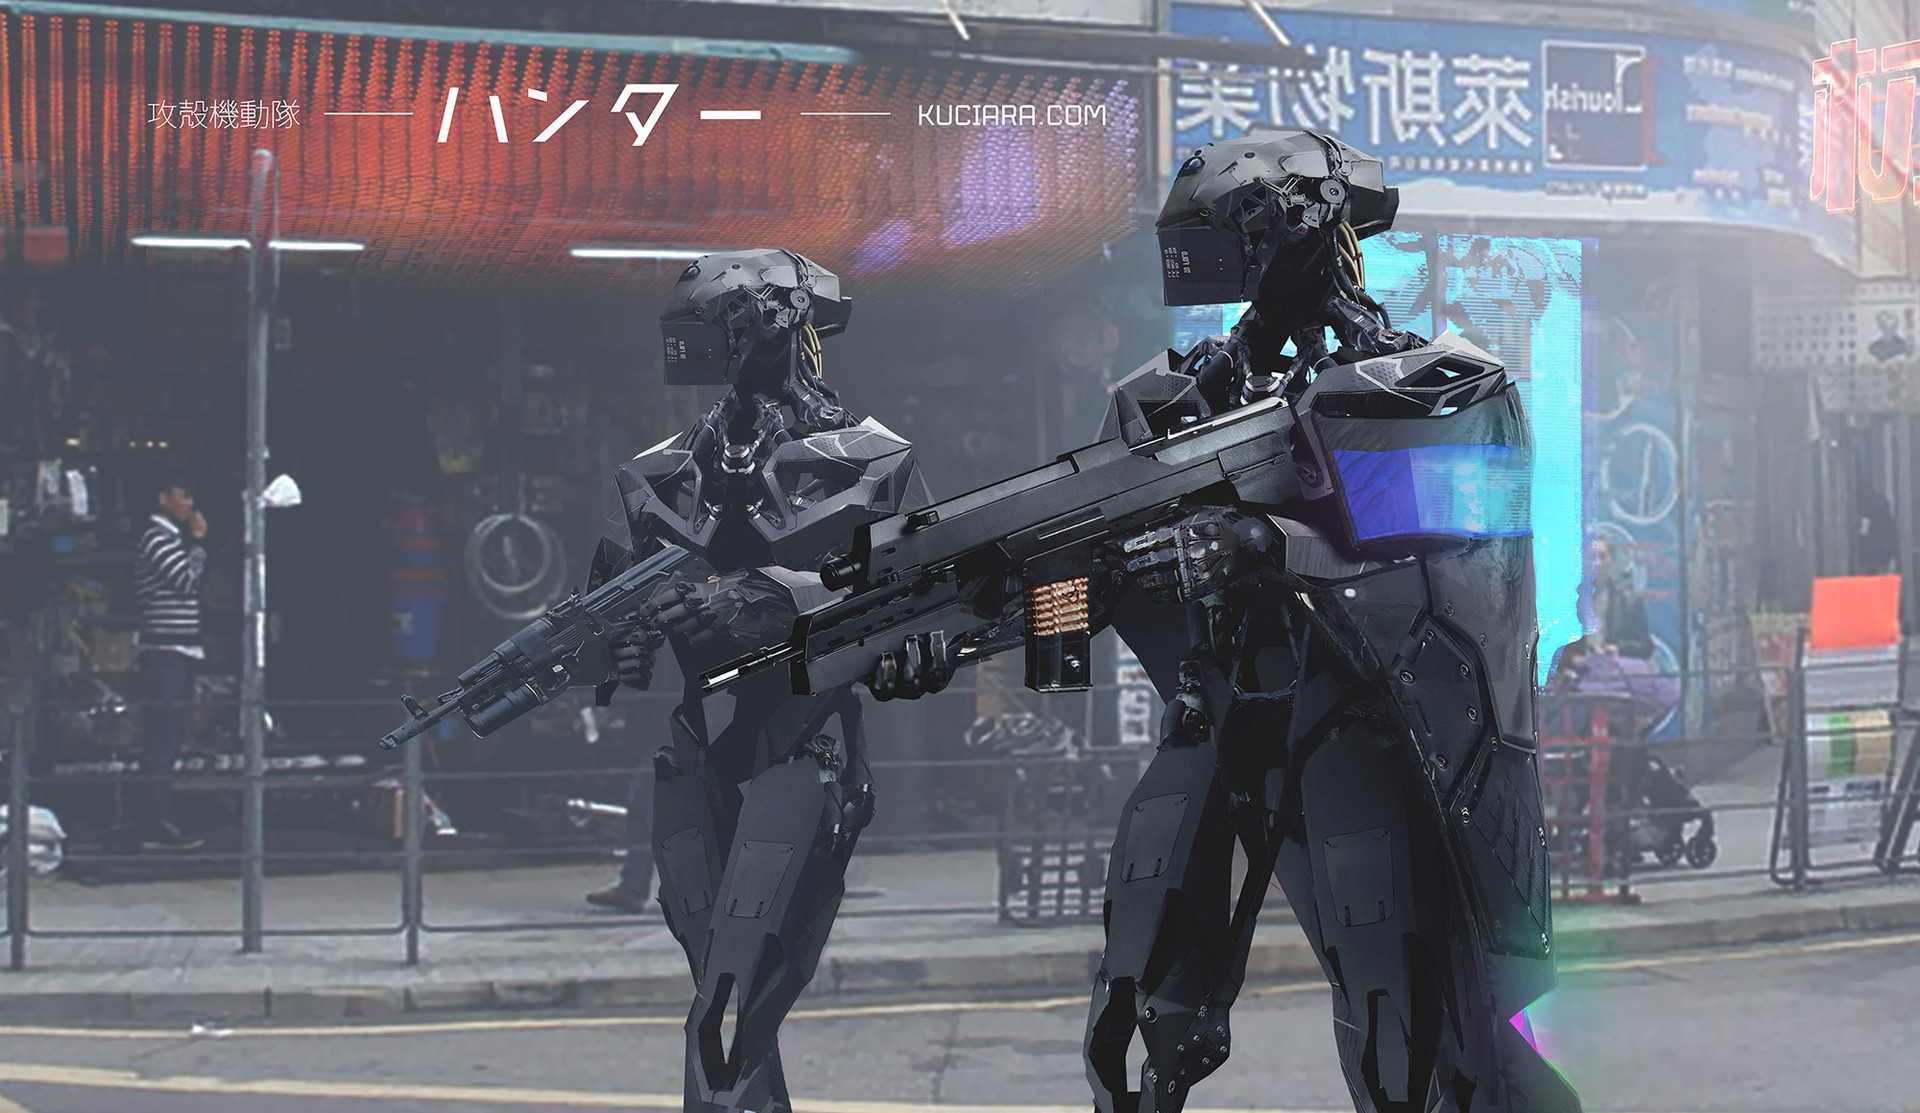 General 1920x1113 cyborg science fiction CGI futuristic weapon